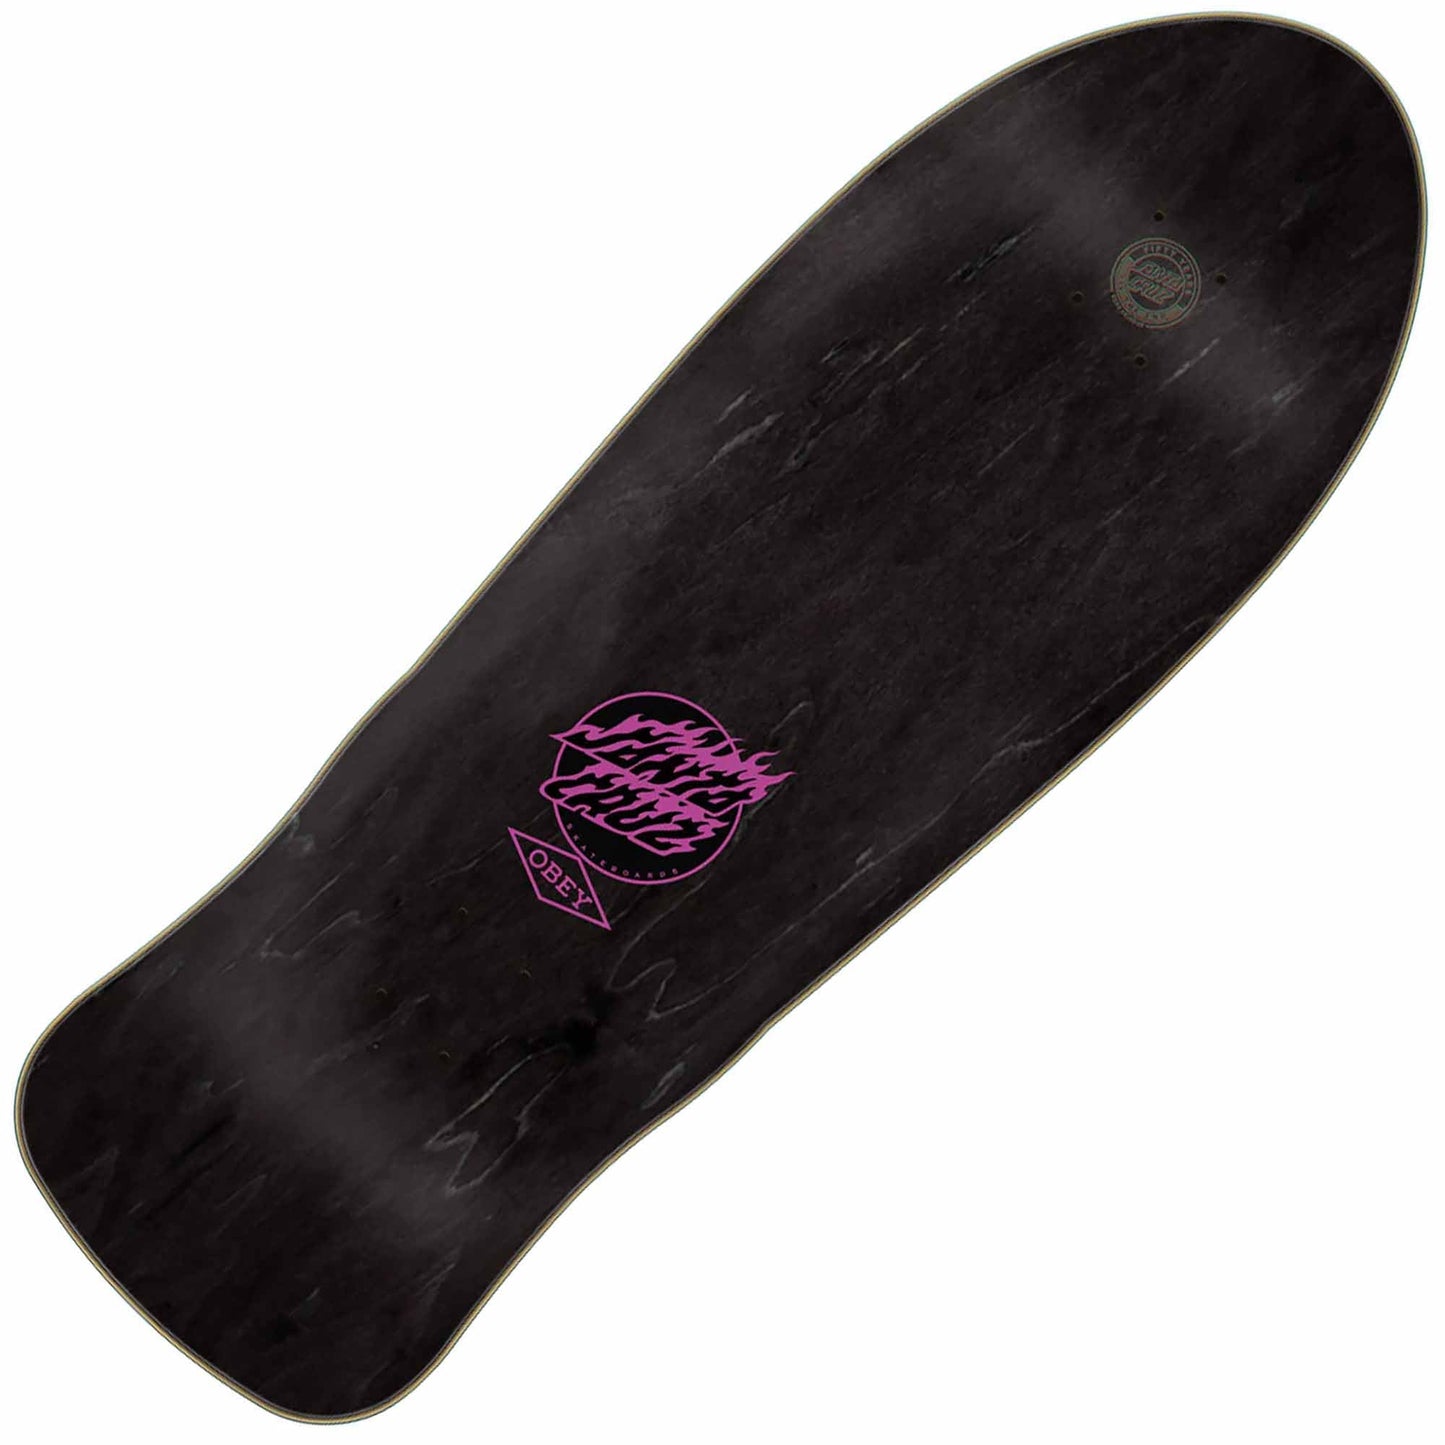 Santa Cruz Obrien Reaper By Shepard Fairey Reissue Deck (9.85”x30") - Tiki Room Skateboards - 2